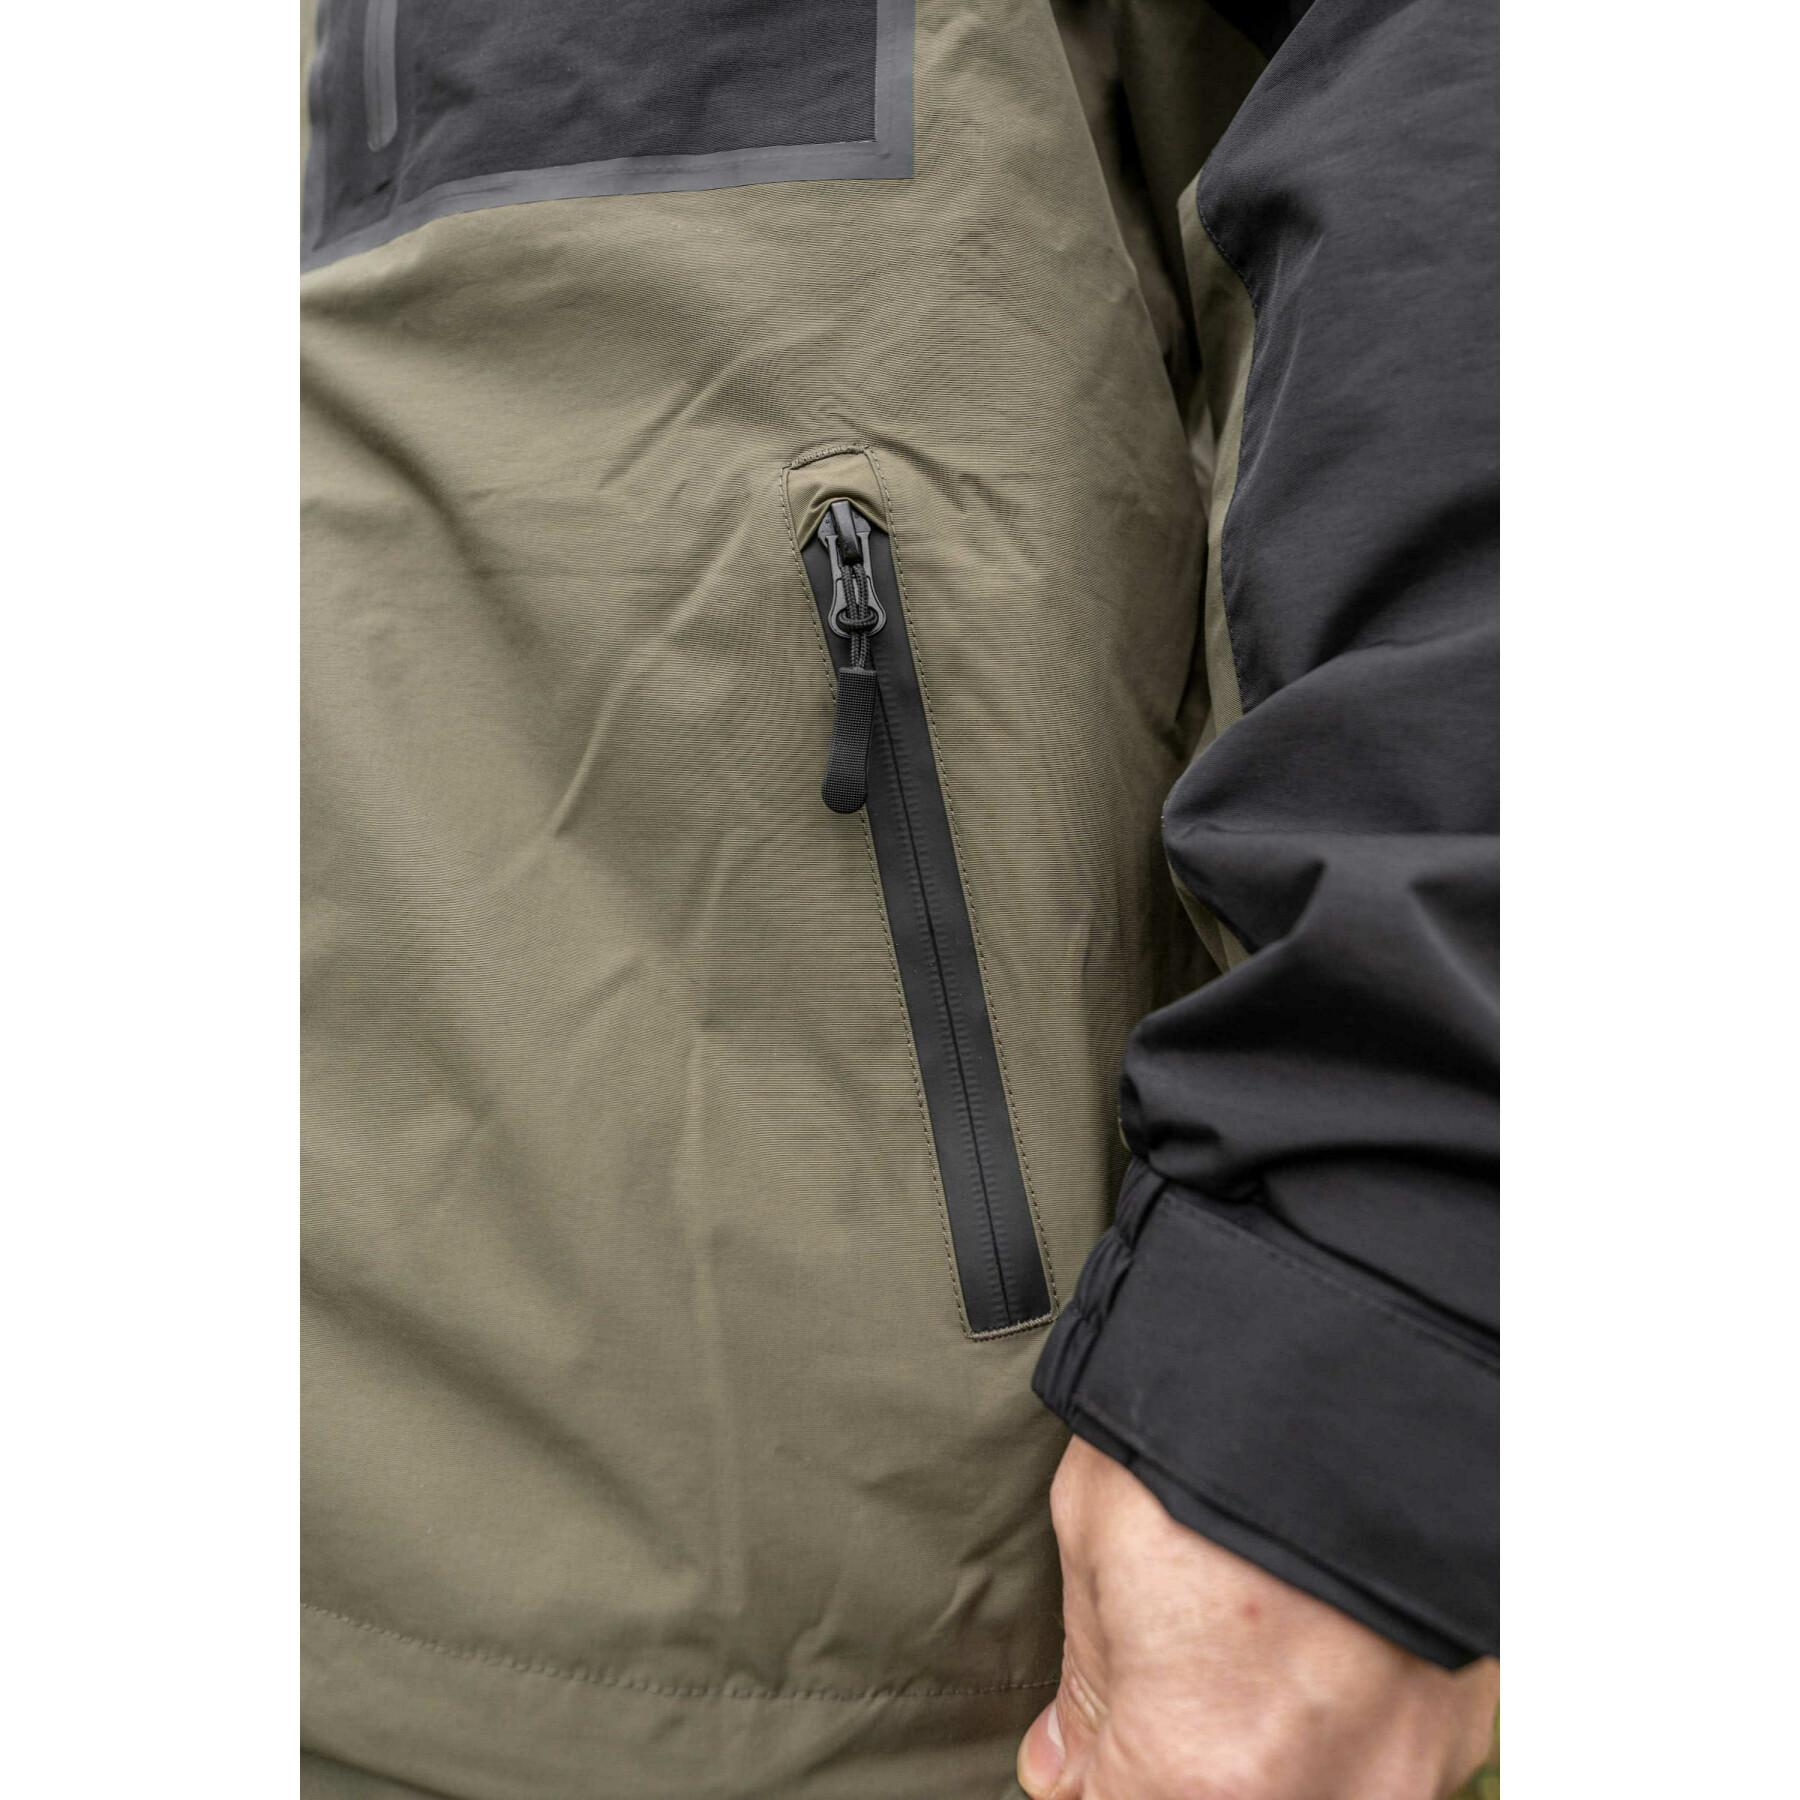 Waterproof jacket Korum neoteric